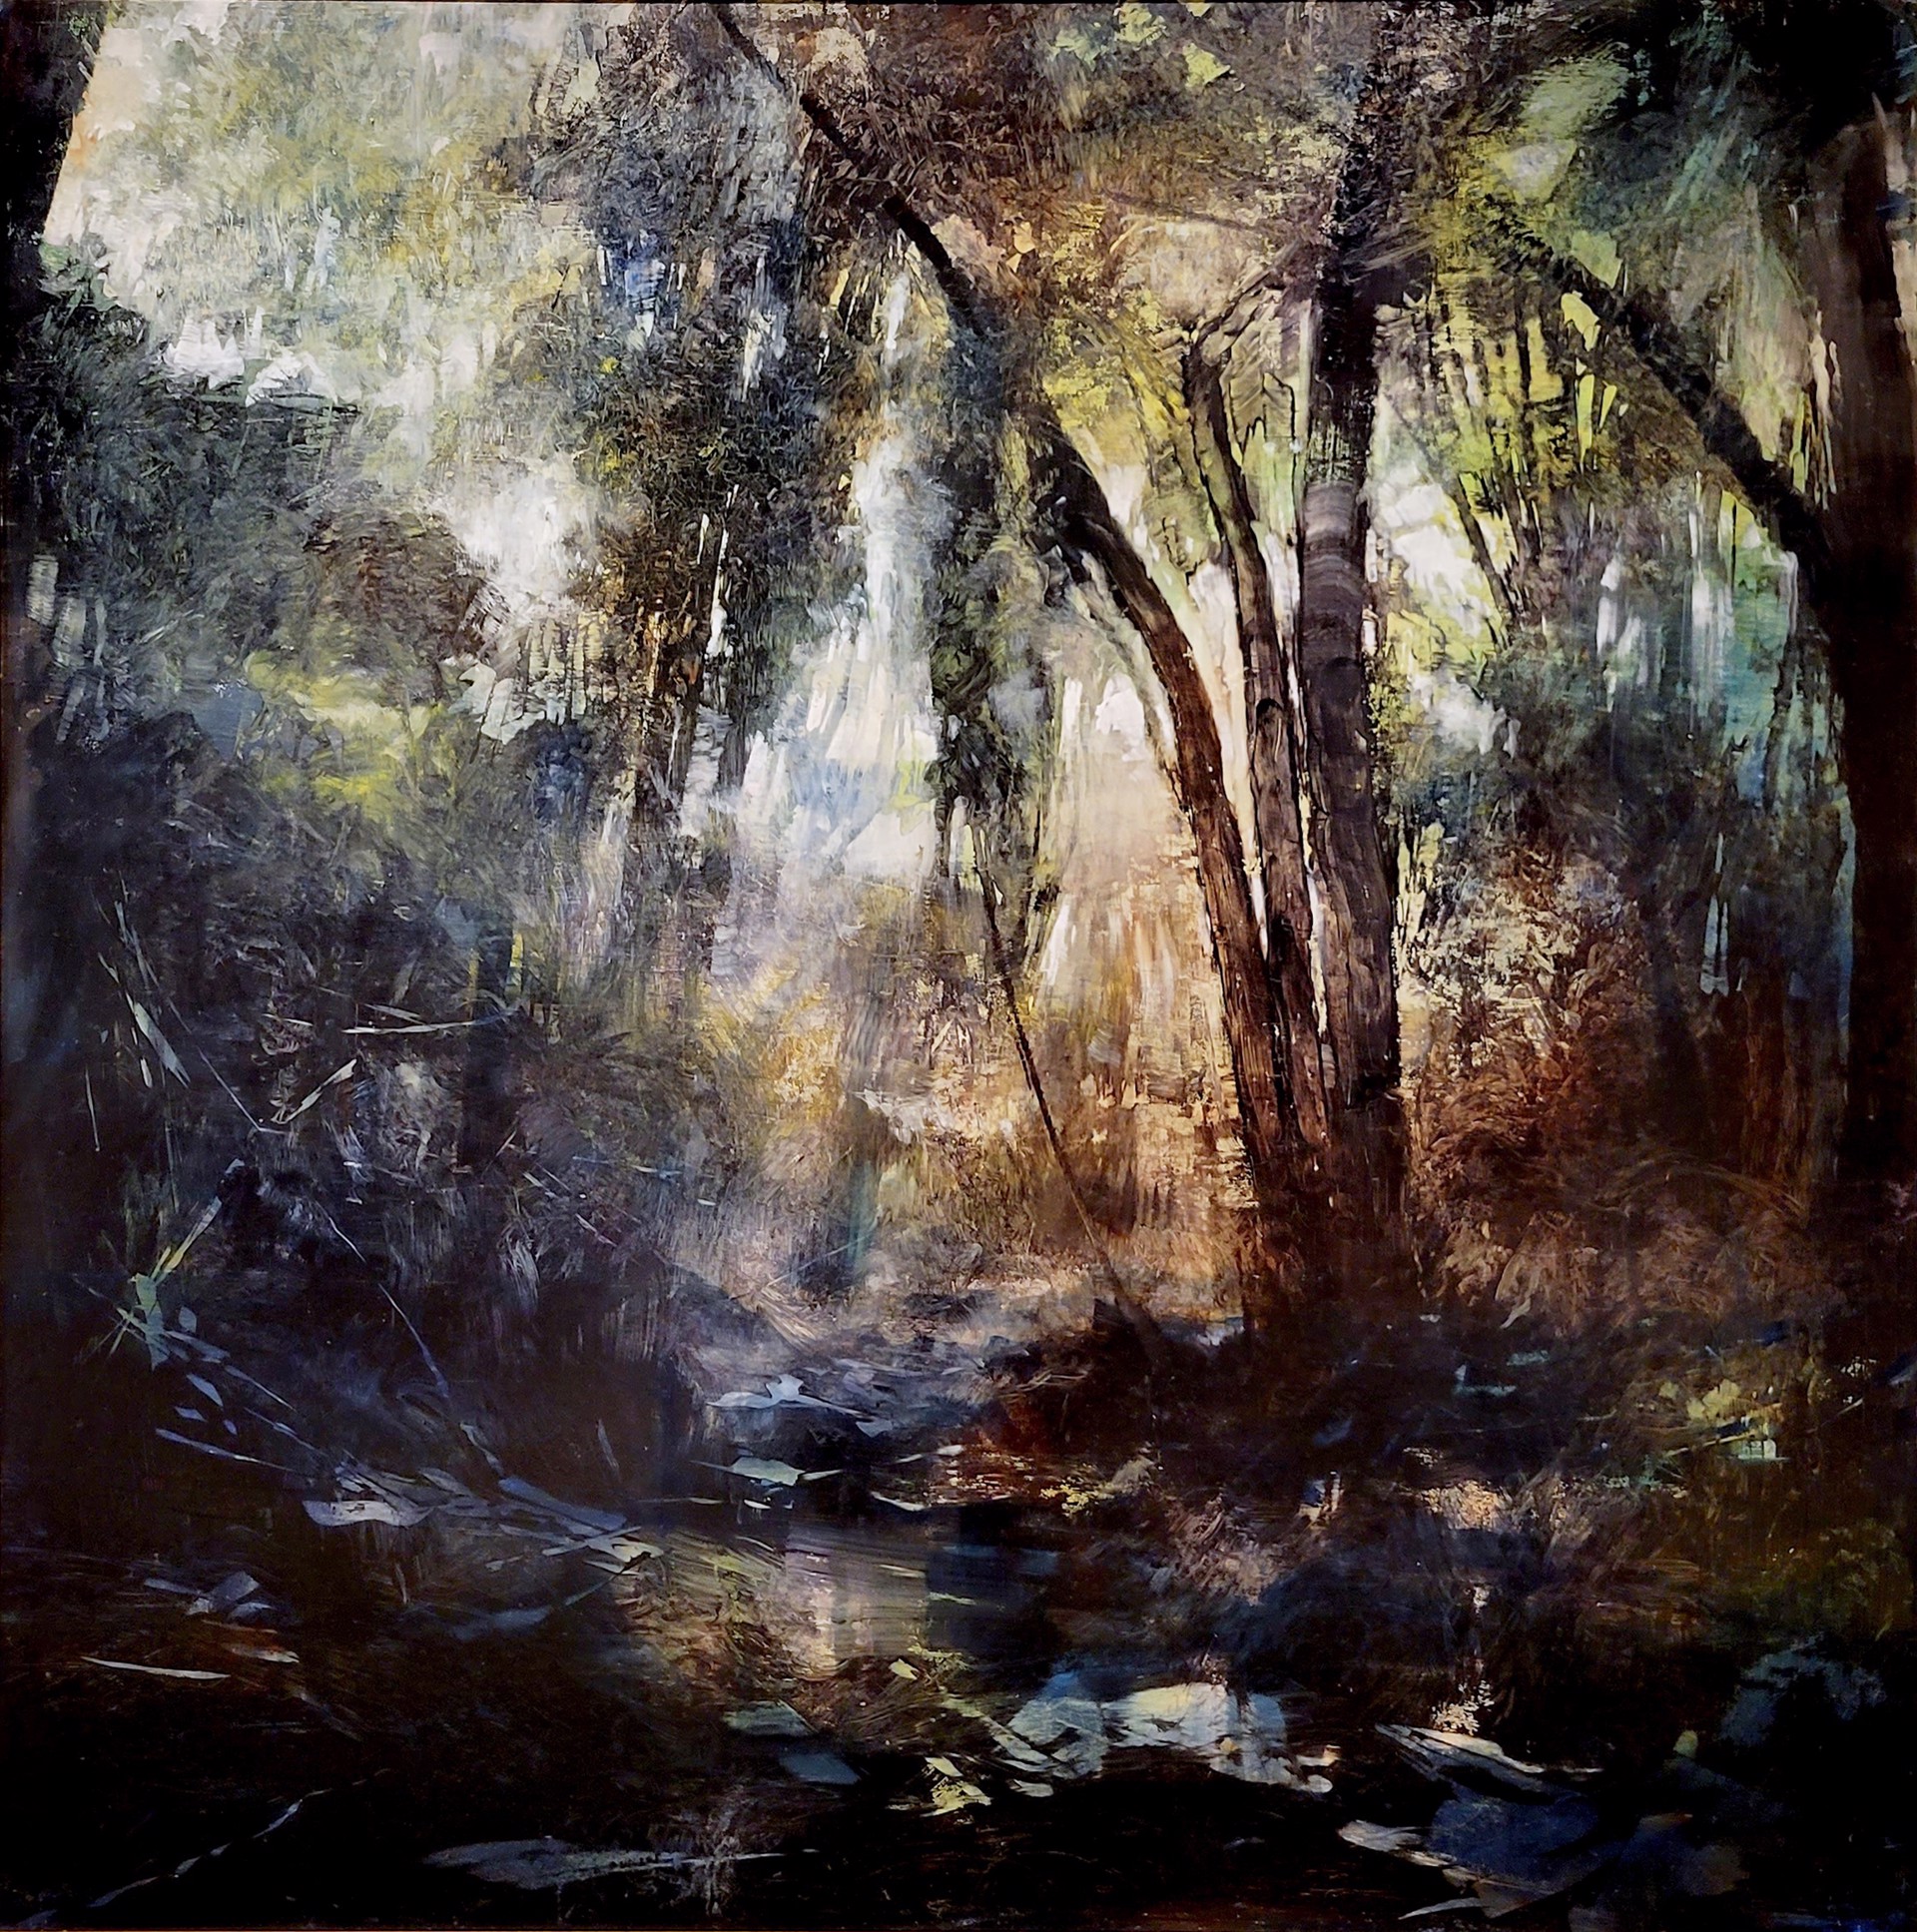 Enchanted Forest by David Allen Dunlop